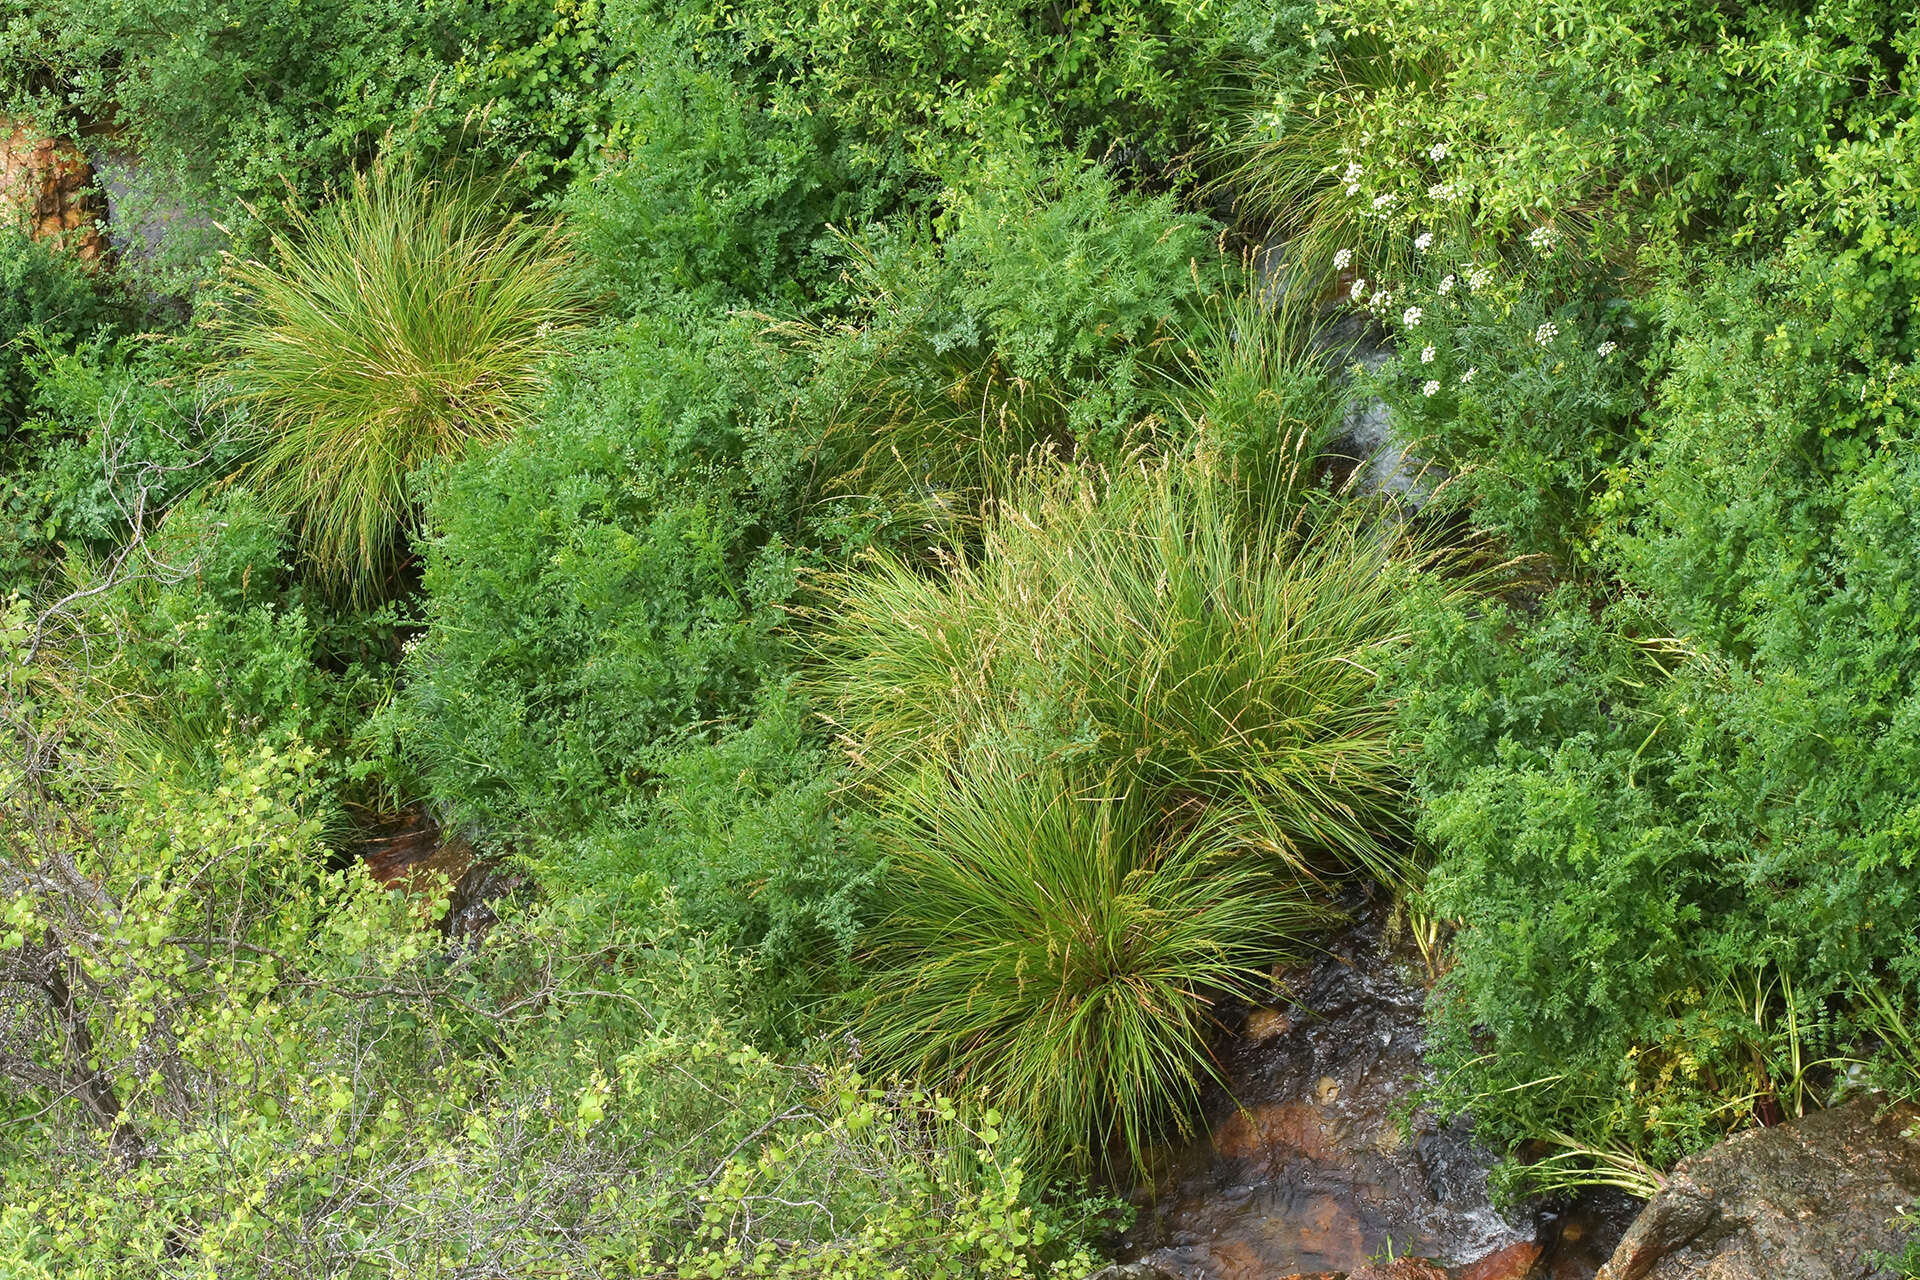 Image of Carex paniculata subsp. lusitanica (Willd.) Maire